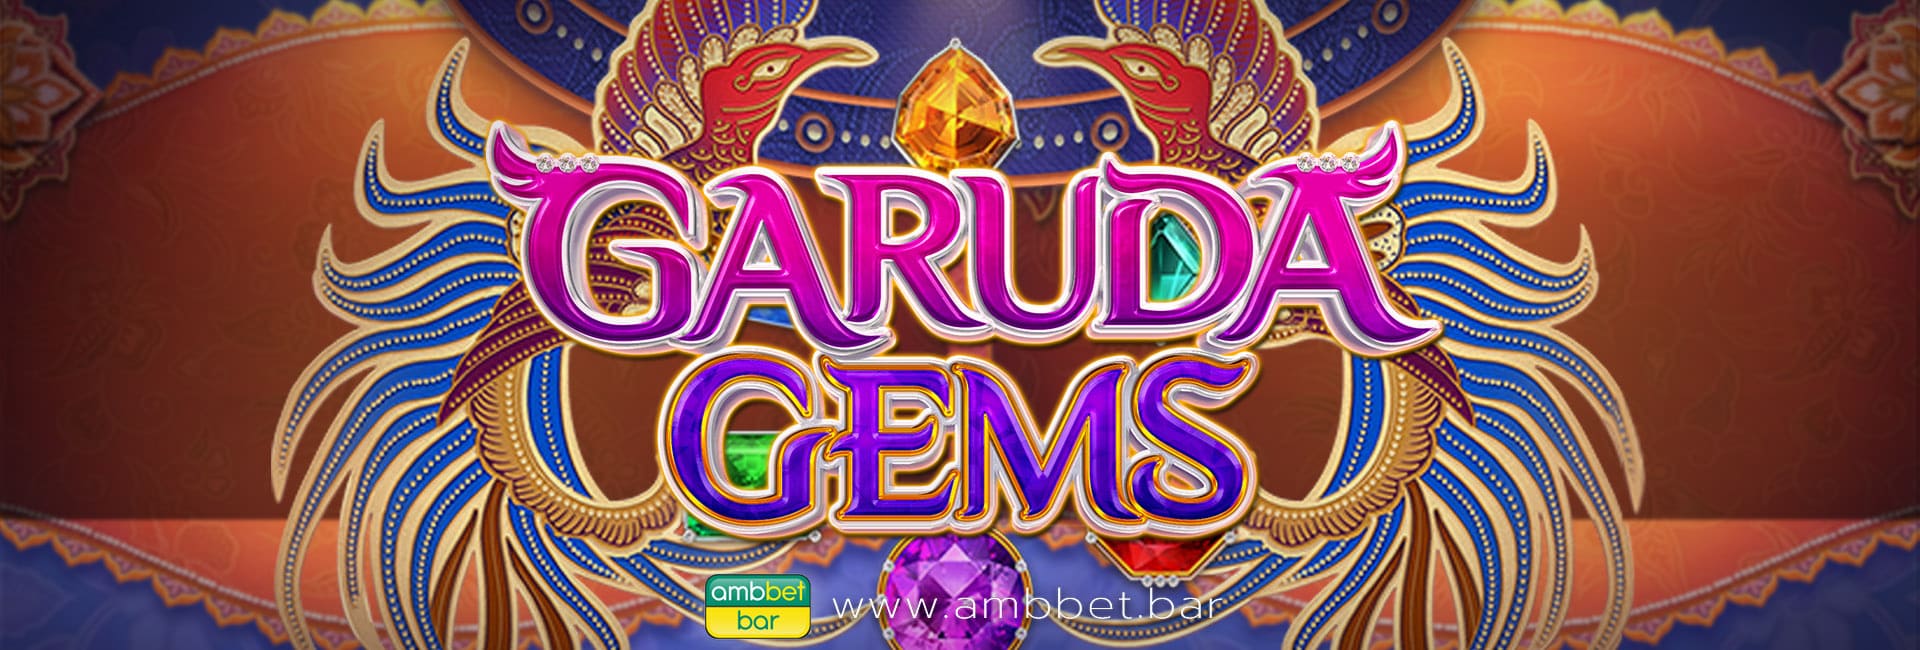 Garuda Gems banner